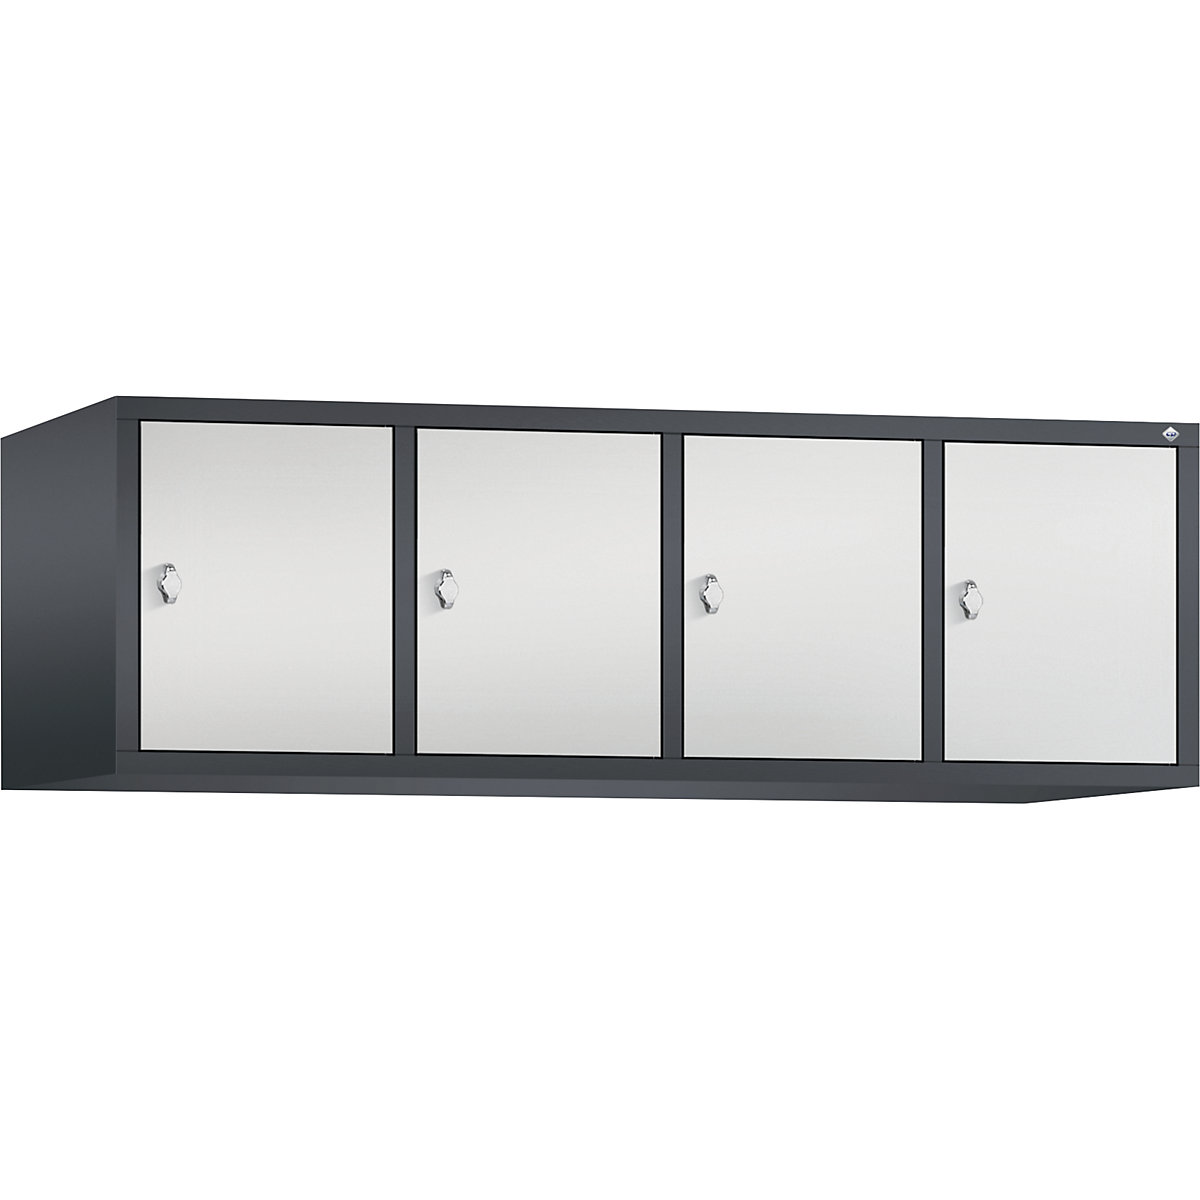 C+P – Altillo CLASSIC, 4 compartimentos, anchura de compartimento 400 mm, gris negruzco / gris luminoso